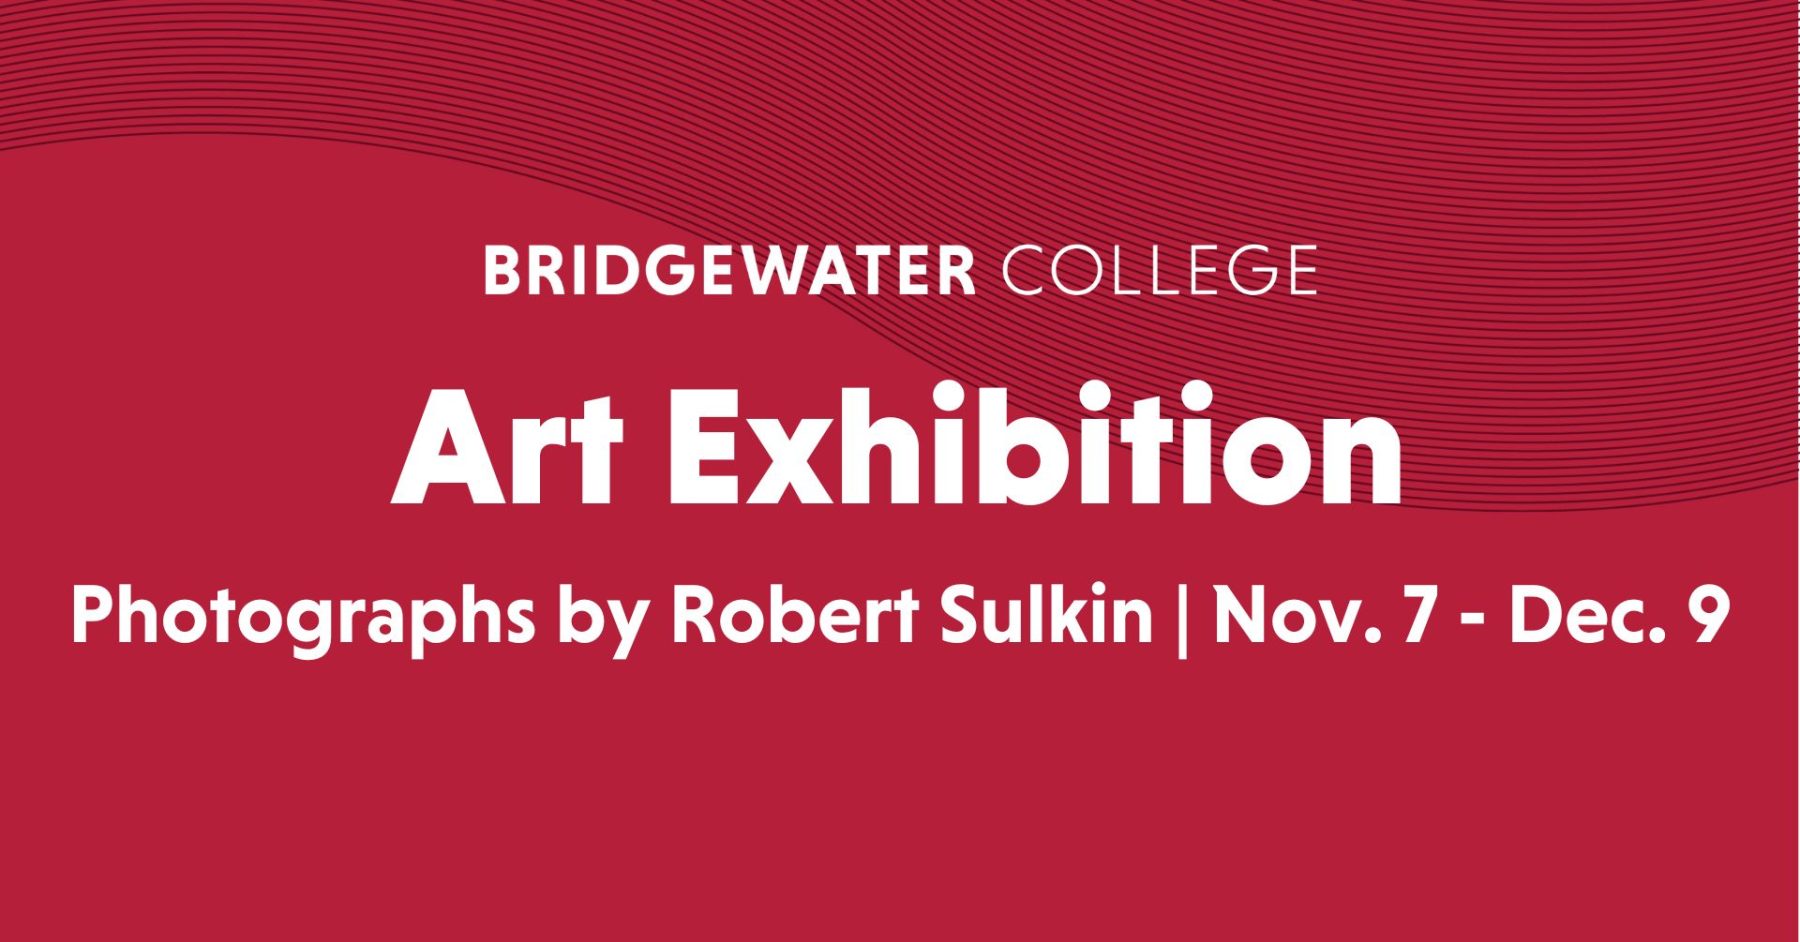 a red graphic that reads: Bridgewater College Art Exhibition Photographs by Robert Sulkin Nov. 7 - Dec. 9